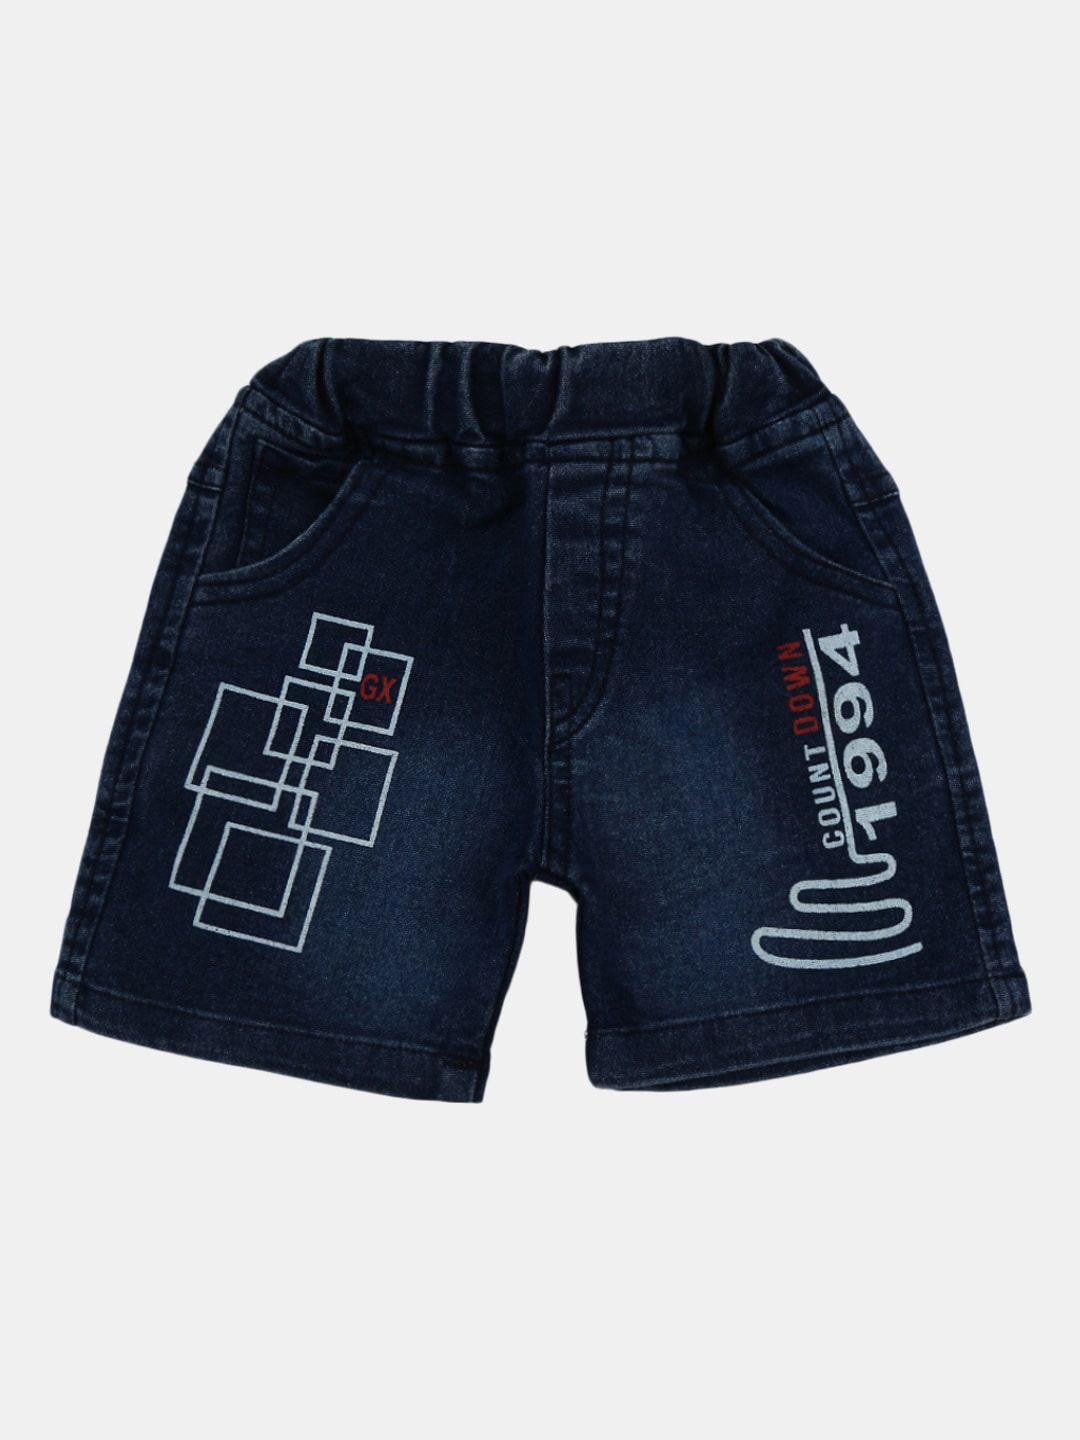 v-mart-infant-cotton-mid-rise-printed-denim-shorts